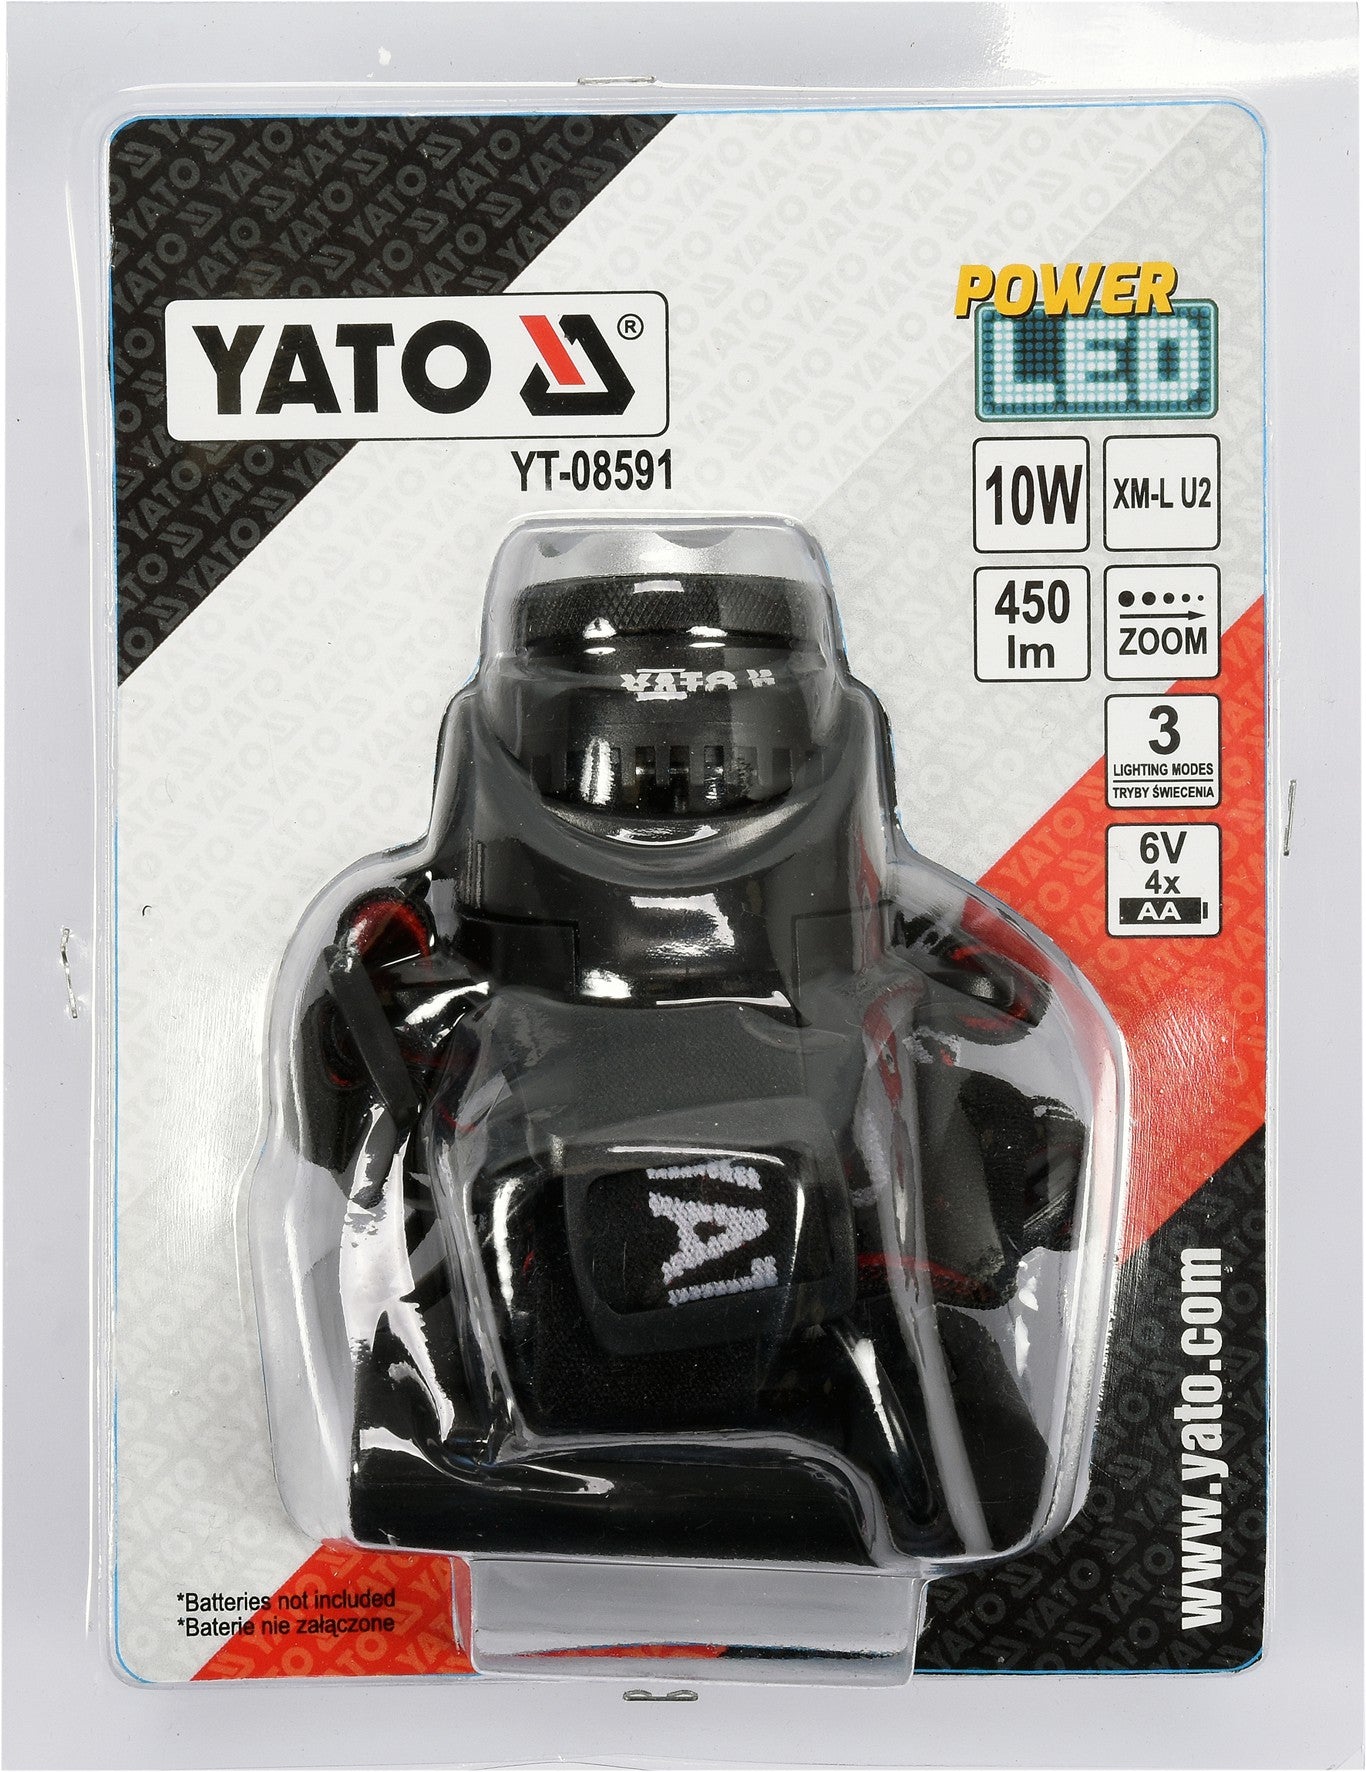 Yato Stirnlampe Kopflampe 10W 450lm XM-L2 Zoom Power LED Werkstatt Outdoor hell